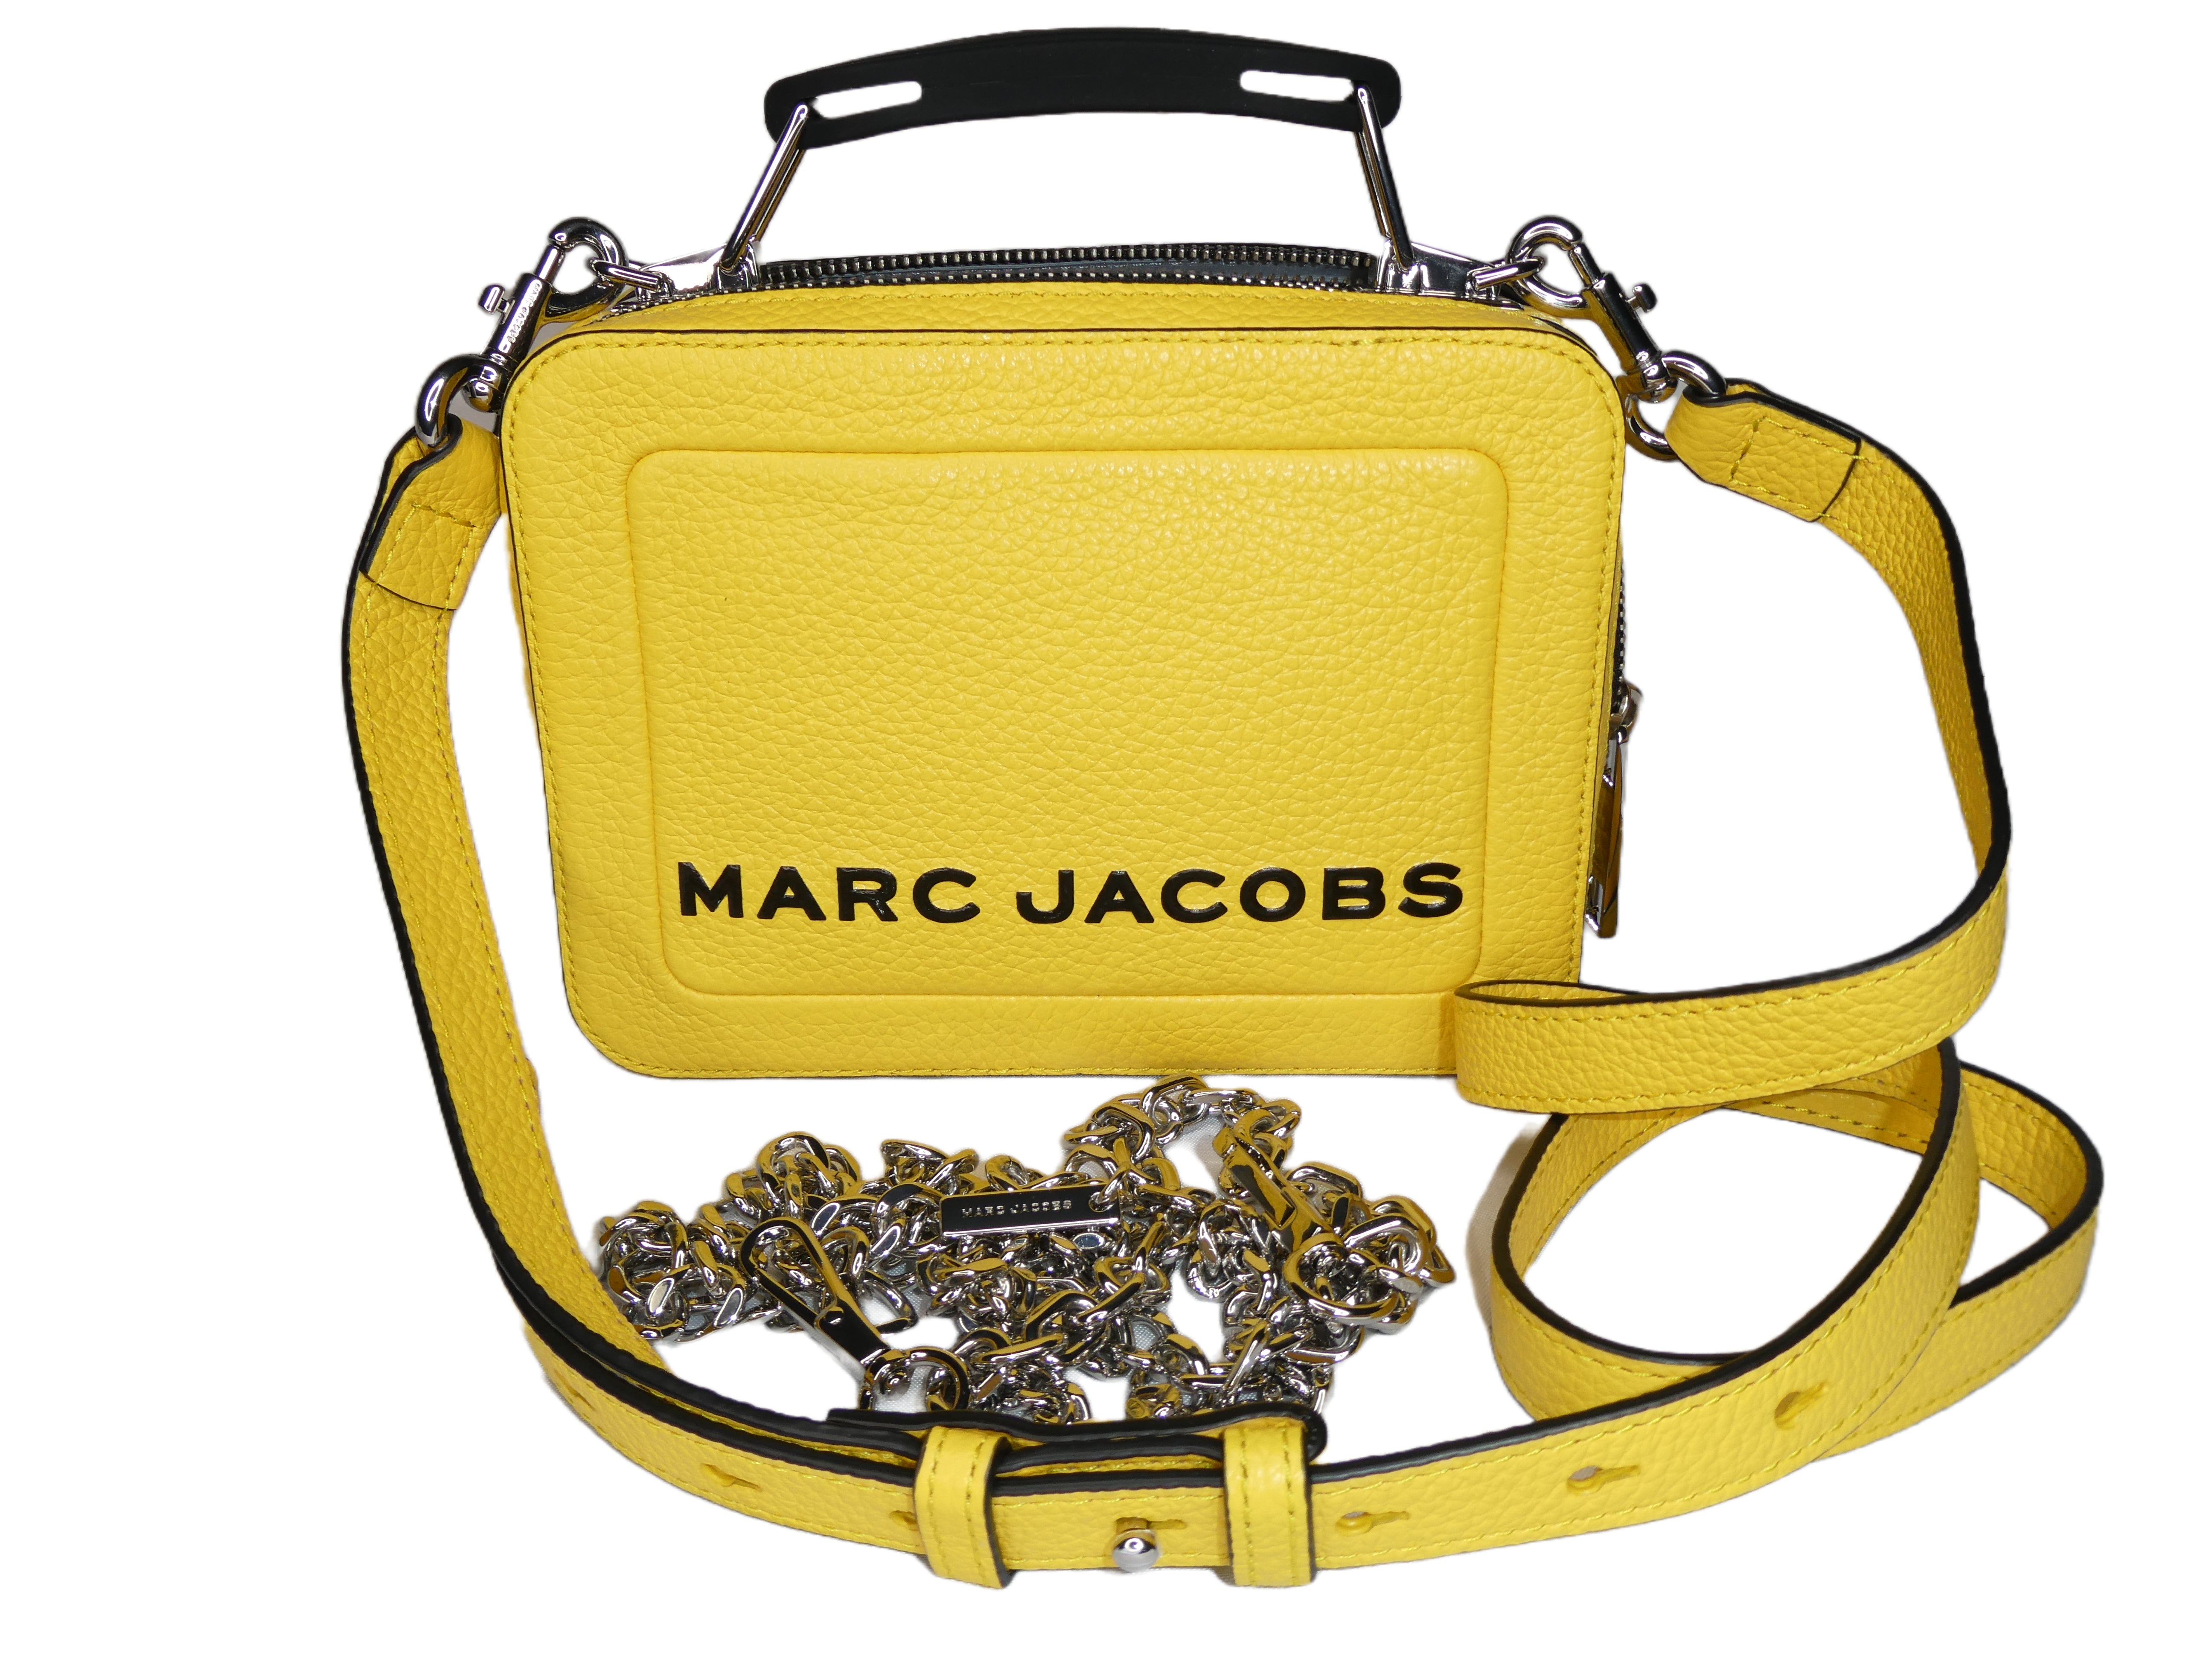 Marc Jacobs Leather Handbag